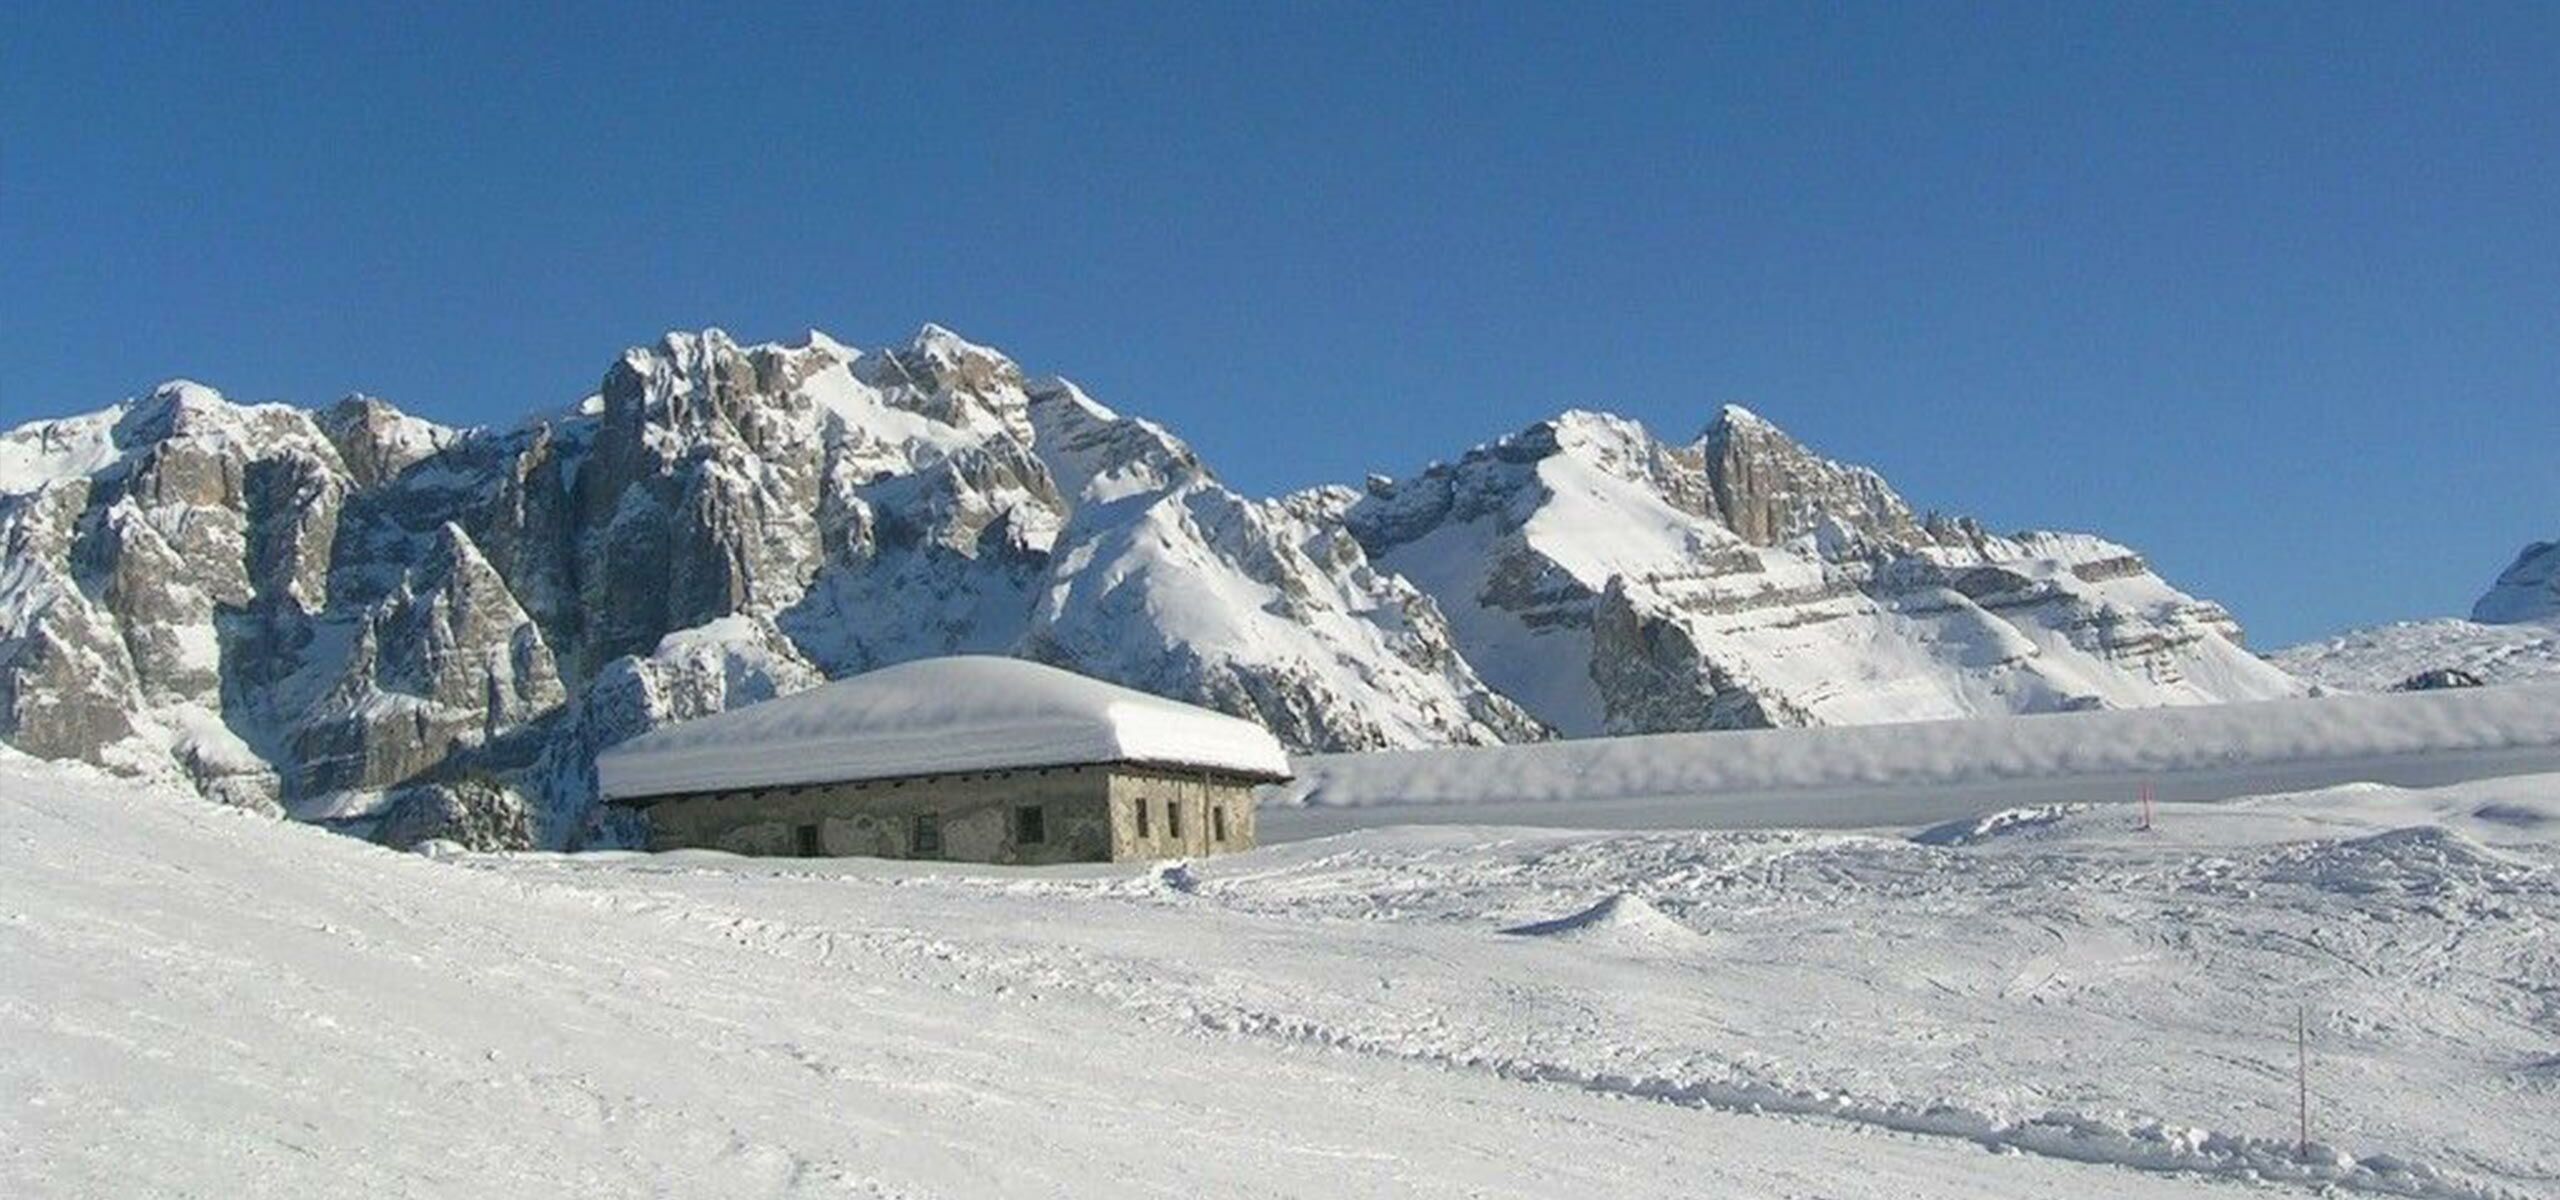 The best snowshoe hikes in Madonna di Campiglio